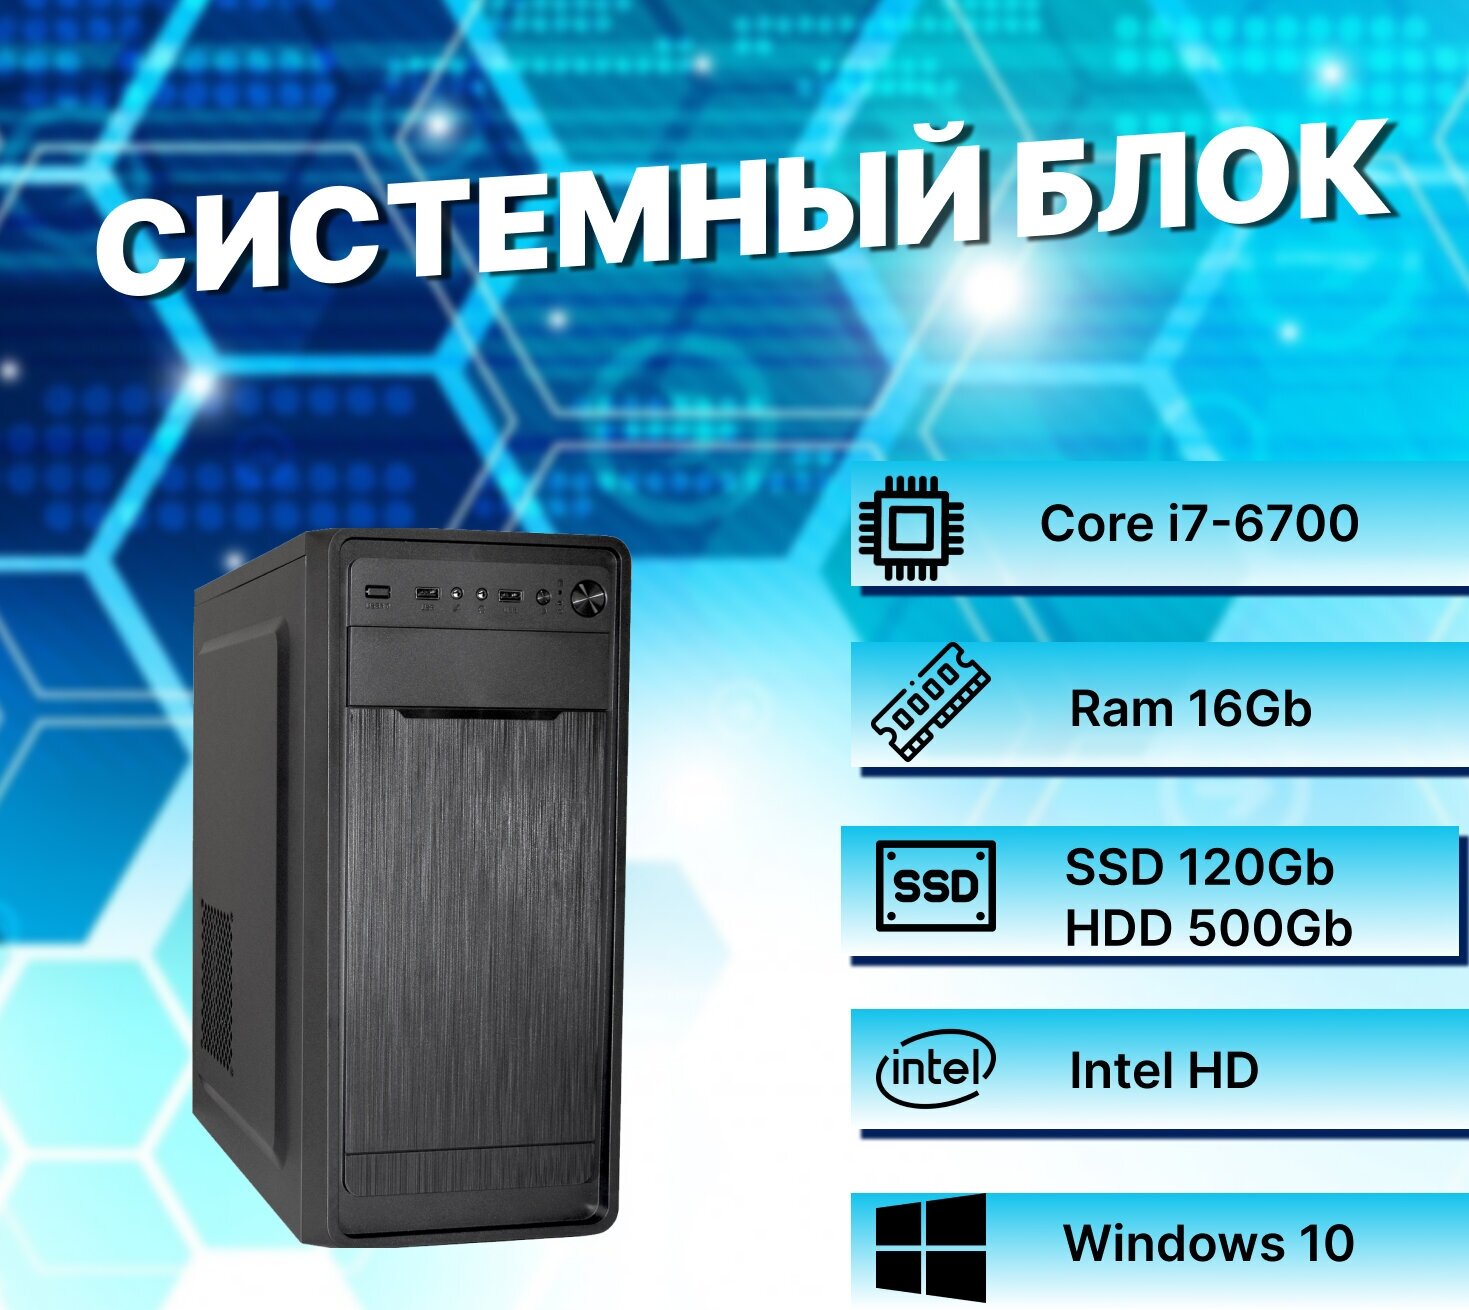 Системный блок Intel Core I7-6700 (3.4ГГц)/ RAM 16Gb/ SSD 120Gb/ HDD 500Gb/ Intel HD/ Windows 10 Pro